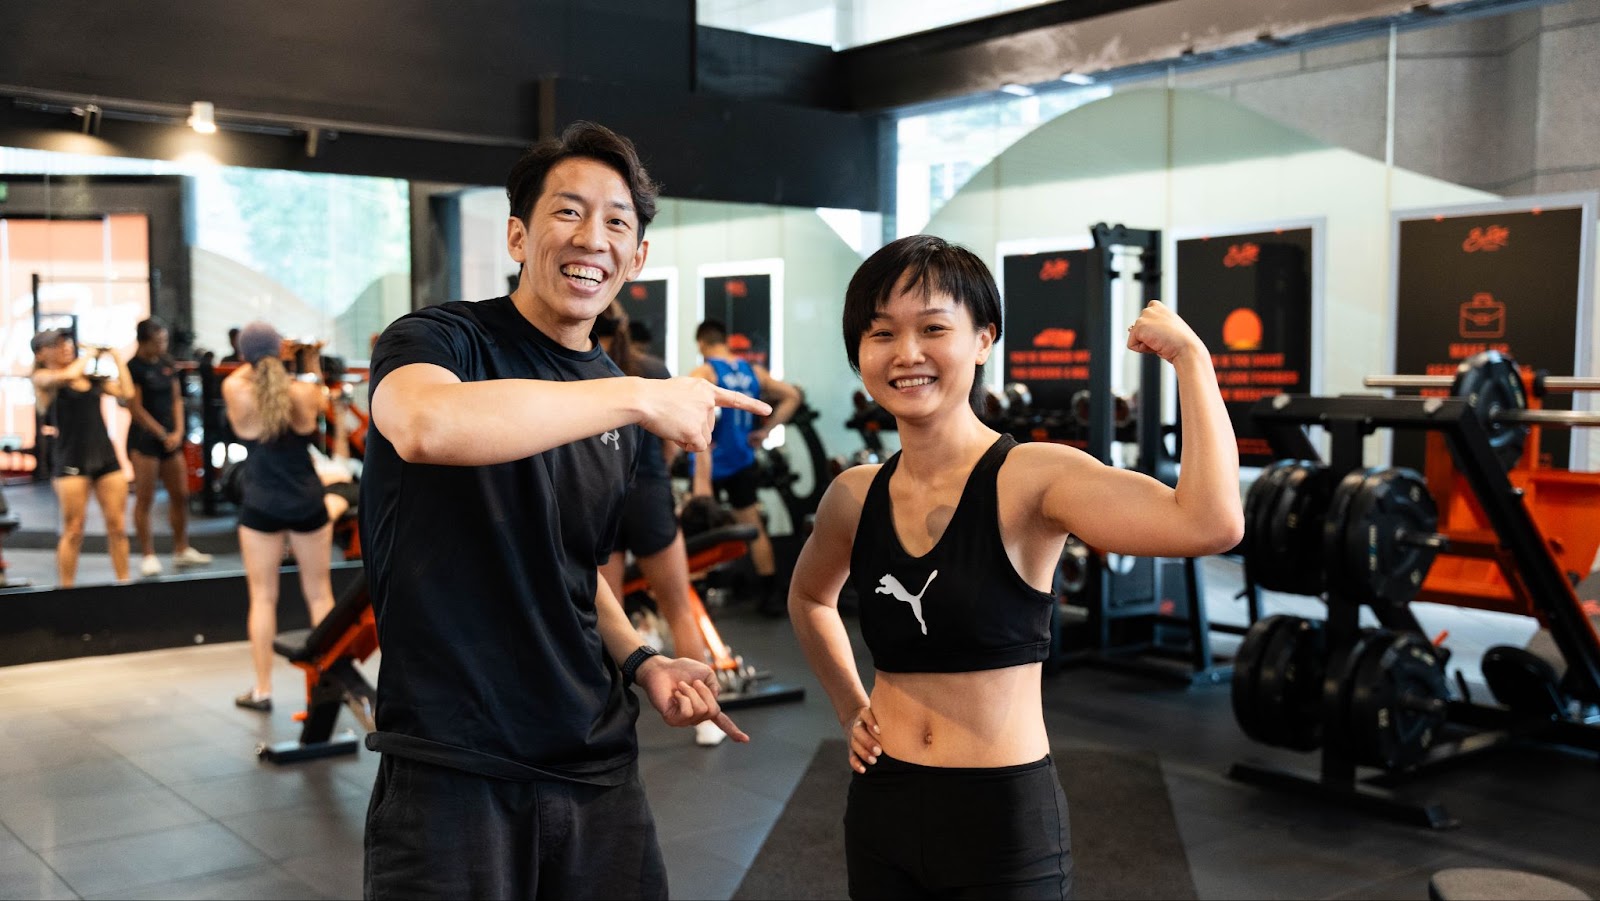 5lGwTRpKbLvFjhfgLBGkht fEblSJ HFoe4aCbGcv16GMMjmFvpVdT3h | Best Personal Training Fitness Gym Singapore | Surge PT: Strength & Results